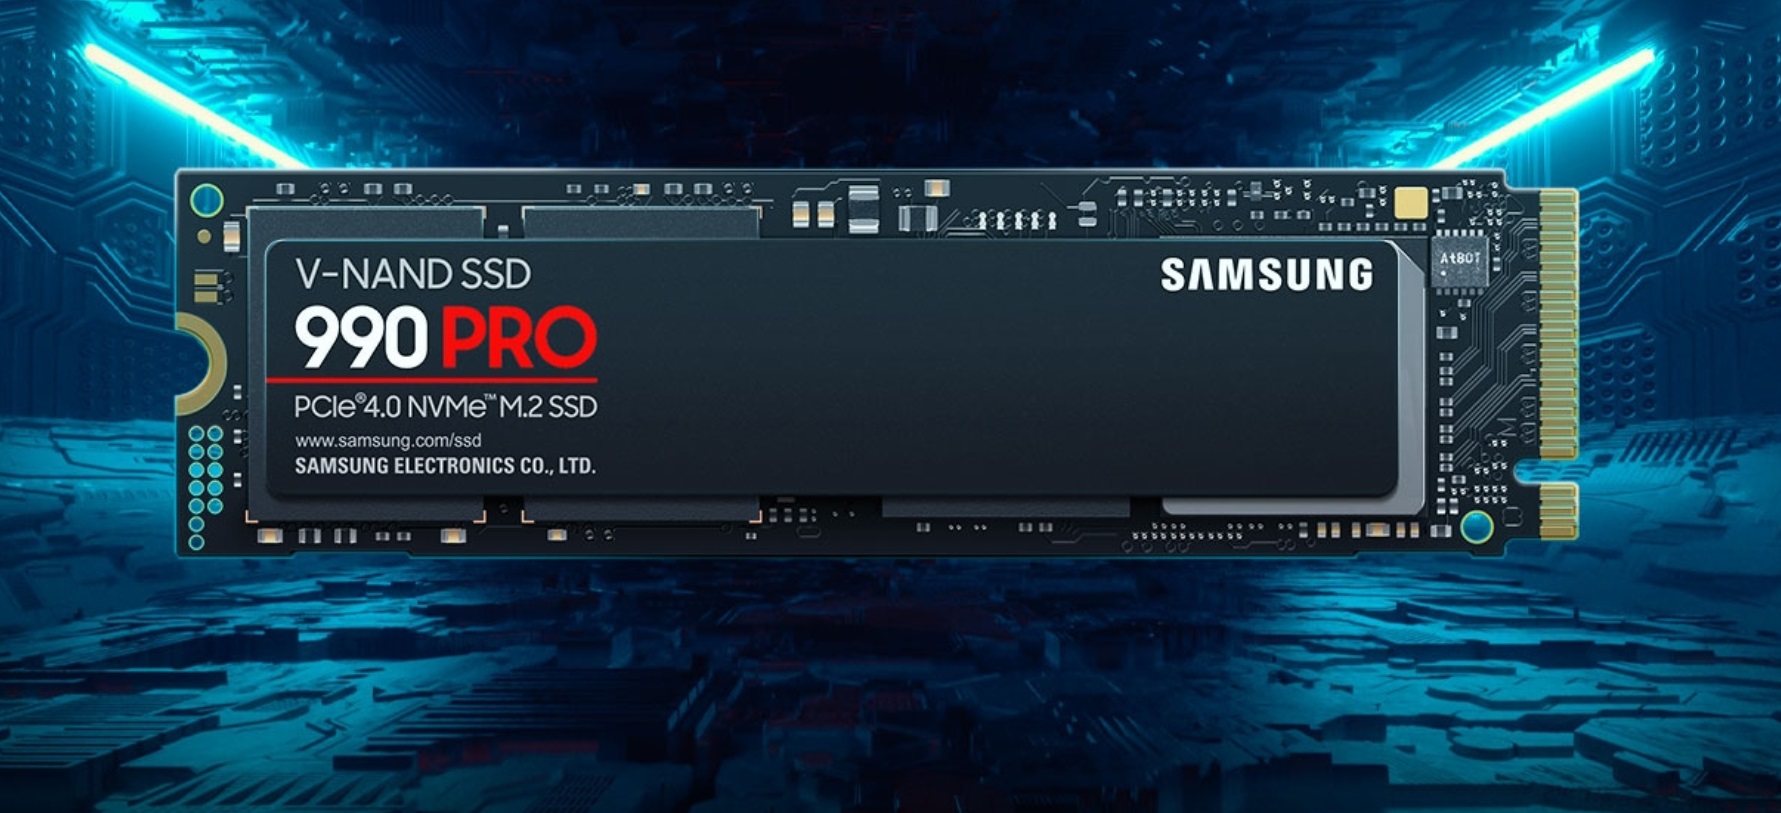 Samsung’s fantastic 990 Pro SSD gets a super-sized 4TB model